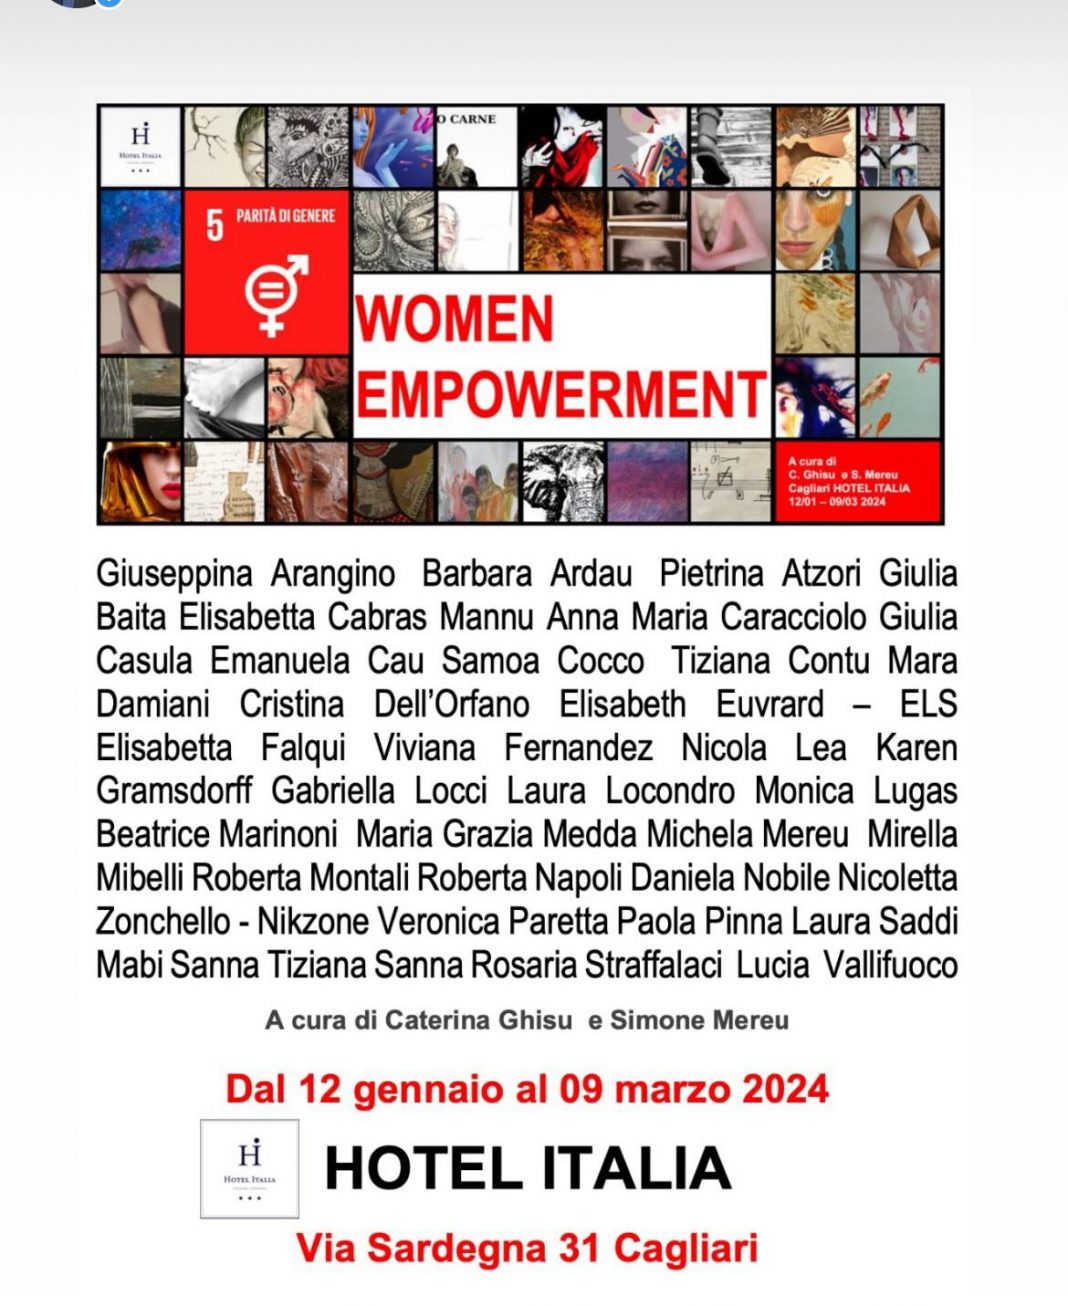 Women Empowermenthttps://www.exibart.com/repository/media/formidable/11/img/a38/women-empowerment-locandina-1068x1306.jpeg